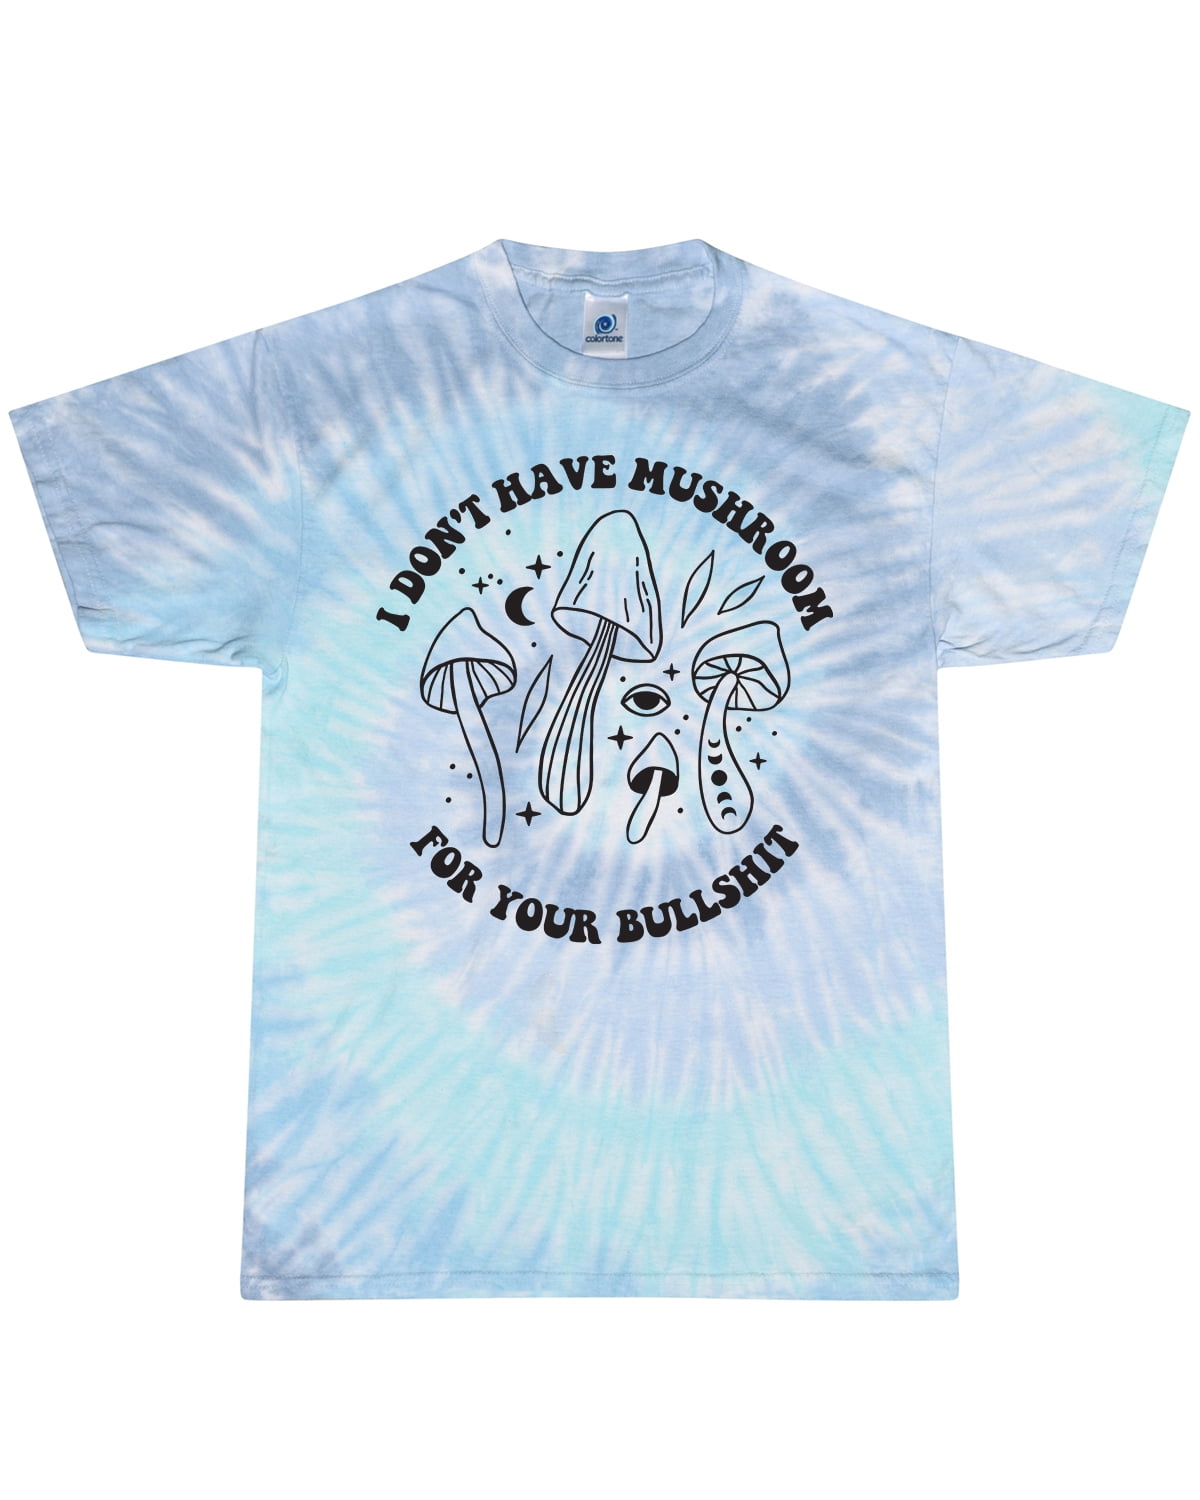 Turquoise Bulls Eye Long Sleeve Tie Dye Shirt Teal LARGE Blue Lagoon